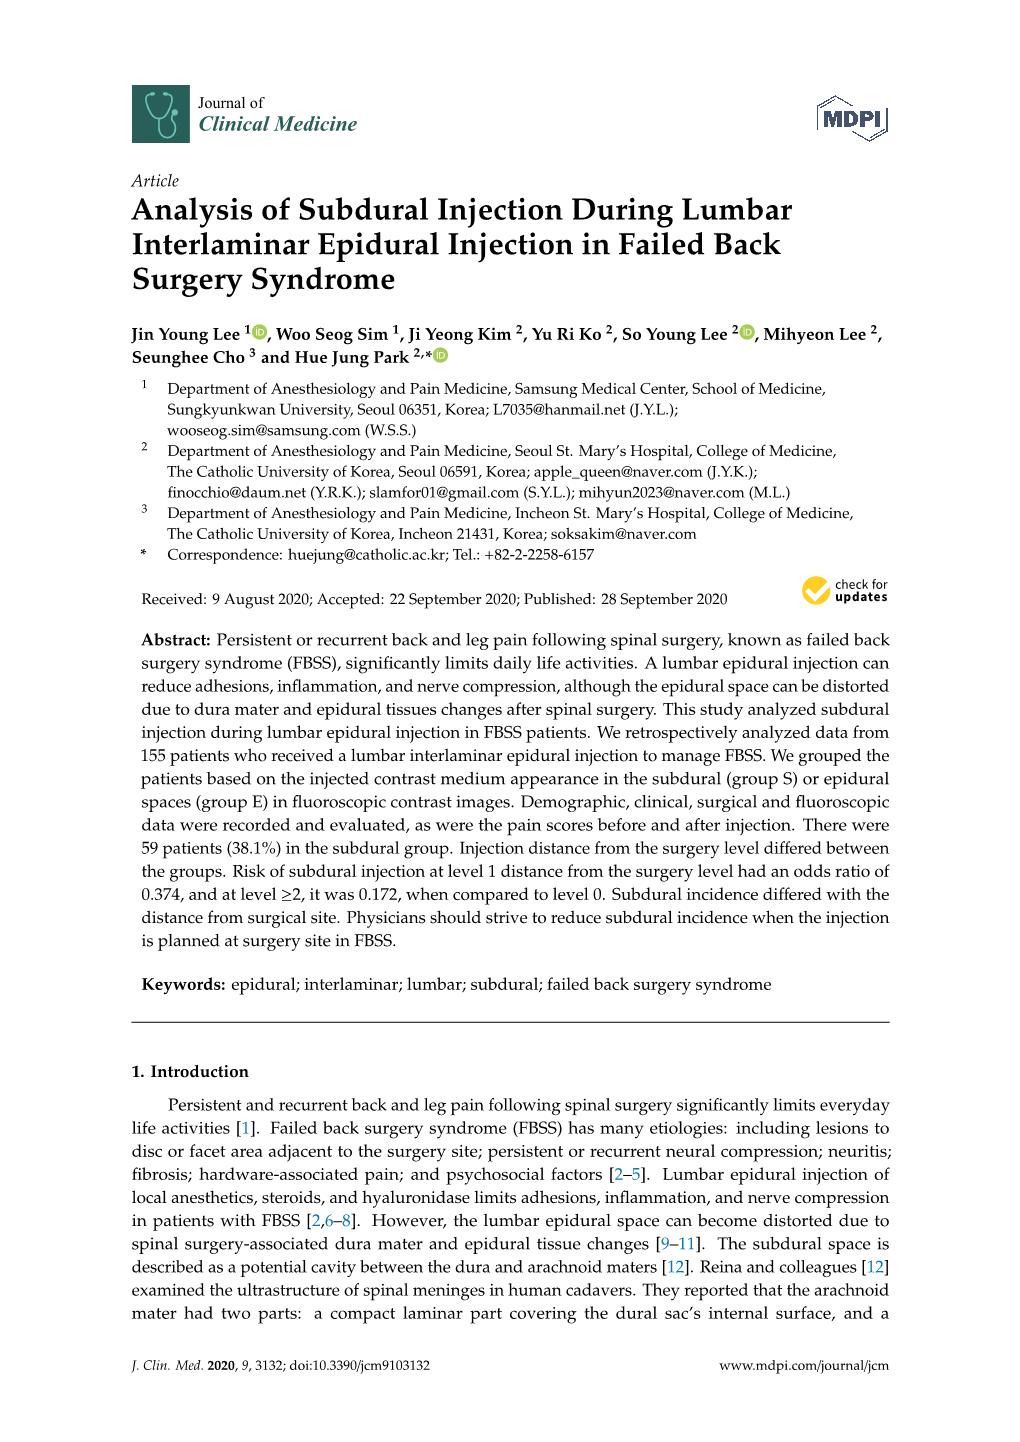 Analysis of Subdural Injection During Lumbar Interlaminar Epidural Injection in Failed Back Surgery Syndrome